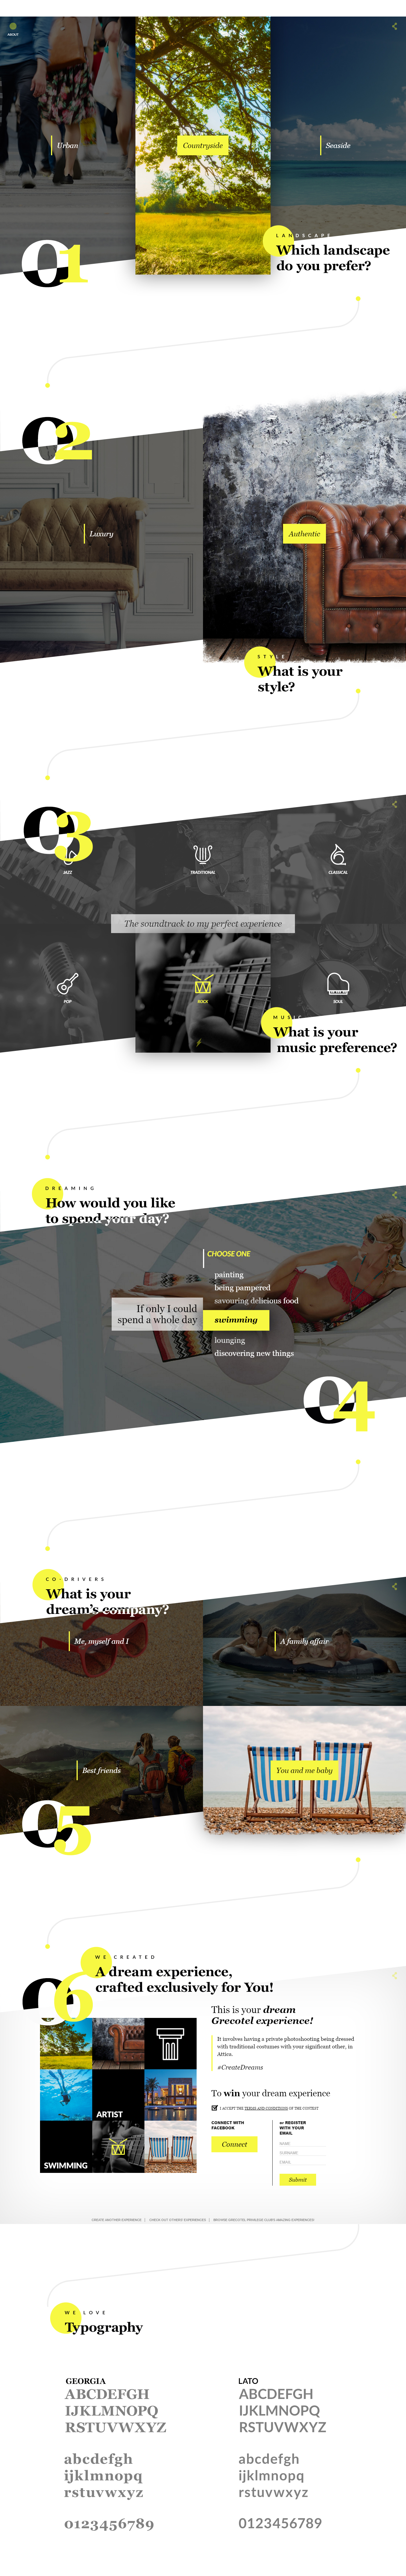 campaign GRECOTEL hotel luxury etourism 5starthotel loyalty digitalcampaign ads mobileexperience